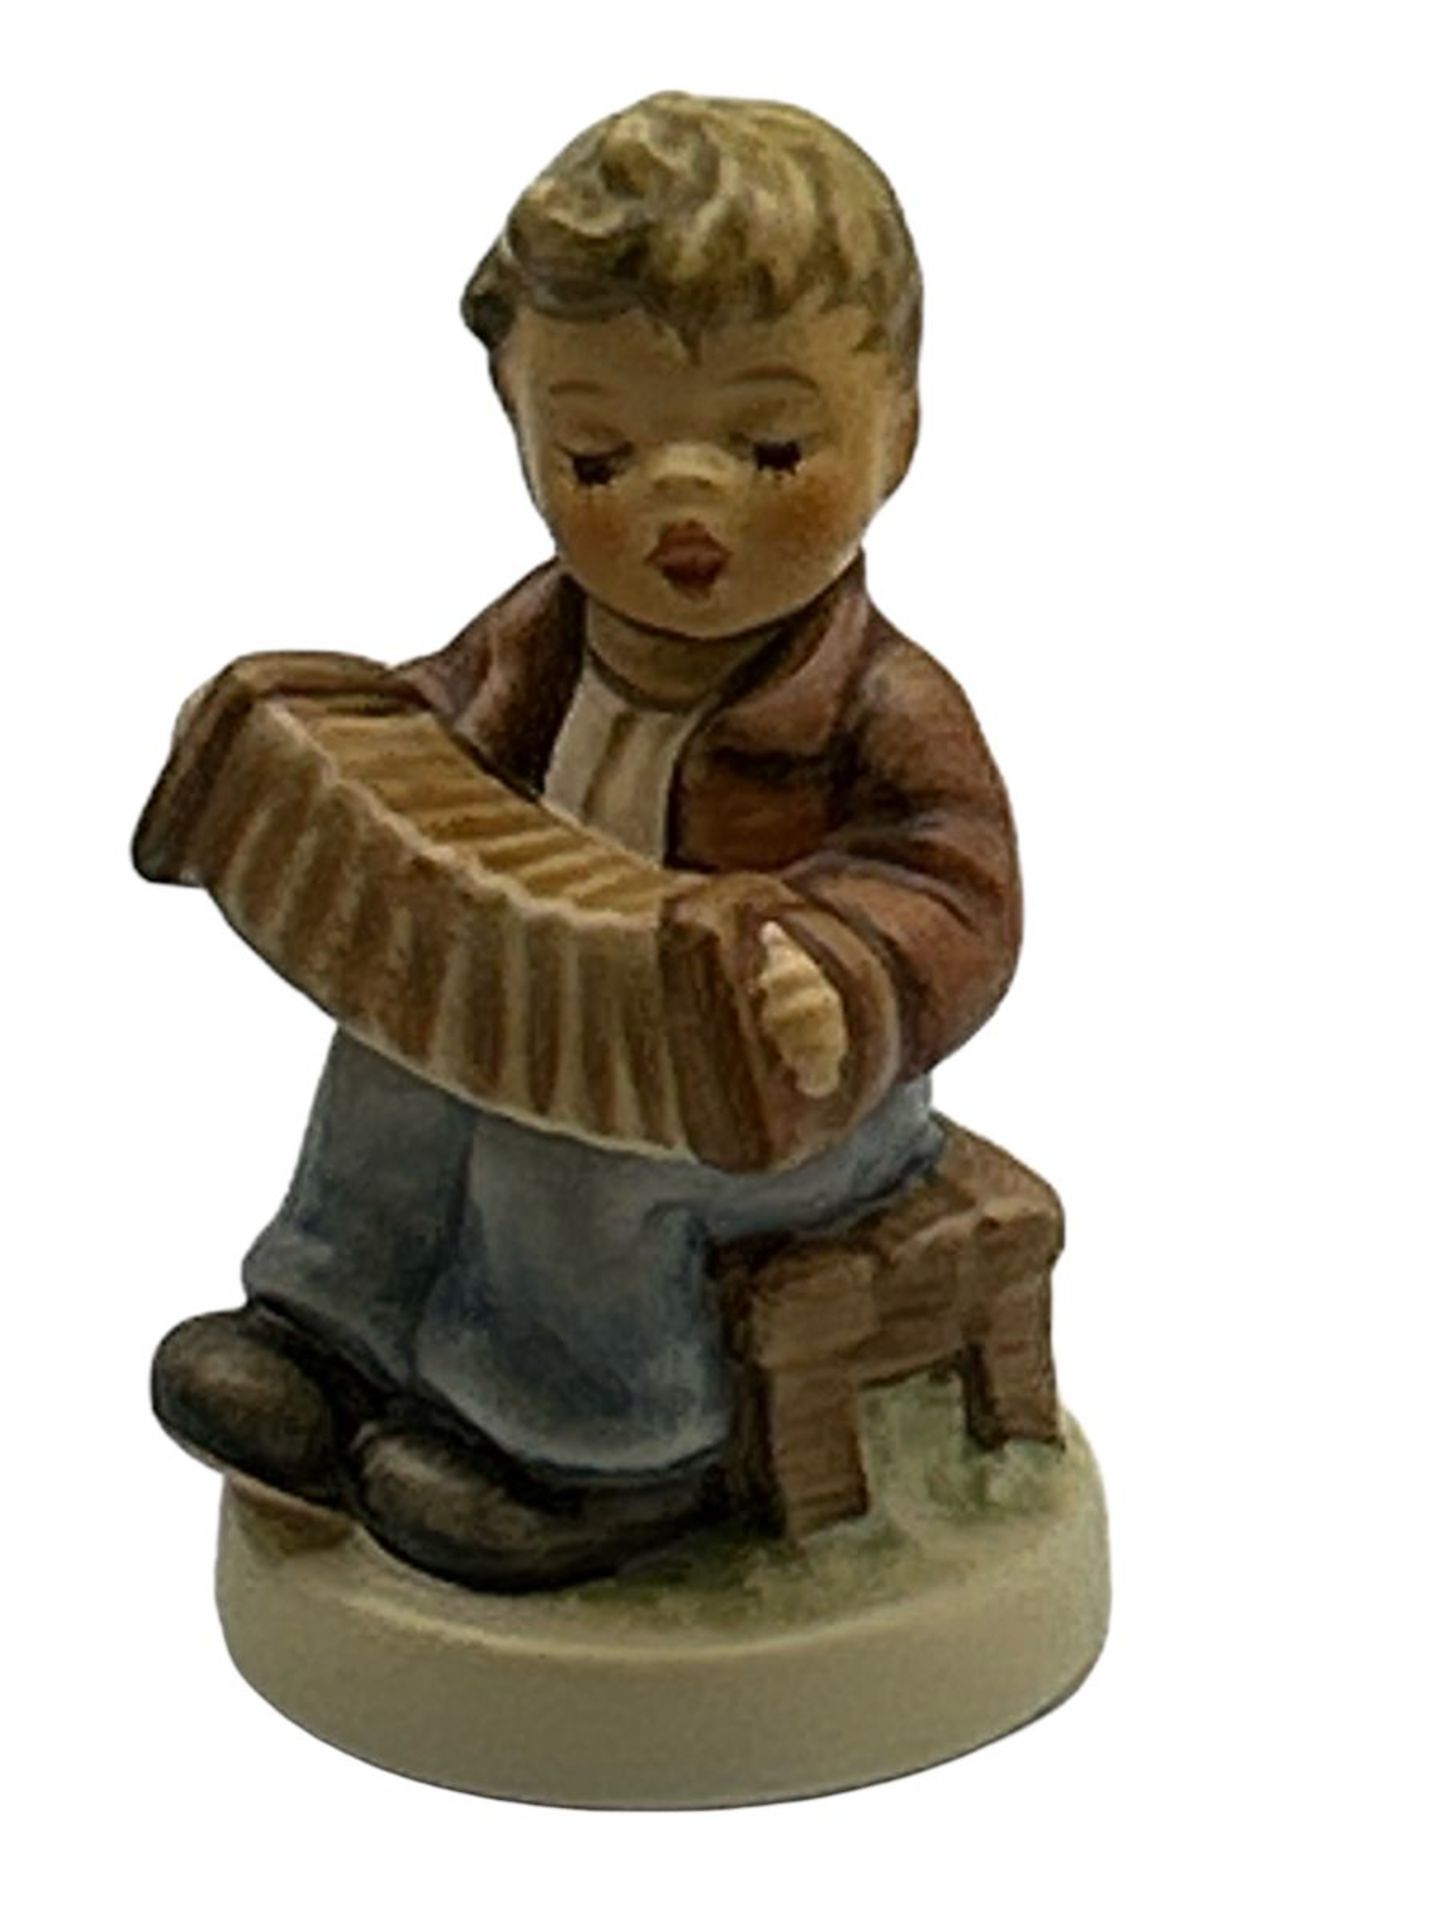 Hummel Figur "Junge mit Ziehharmonika" von Goebel, in OVP, H-7 cm - Image 2 of 2